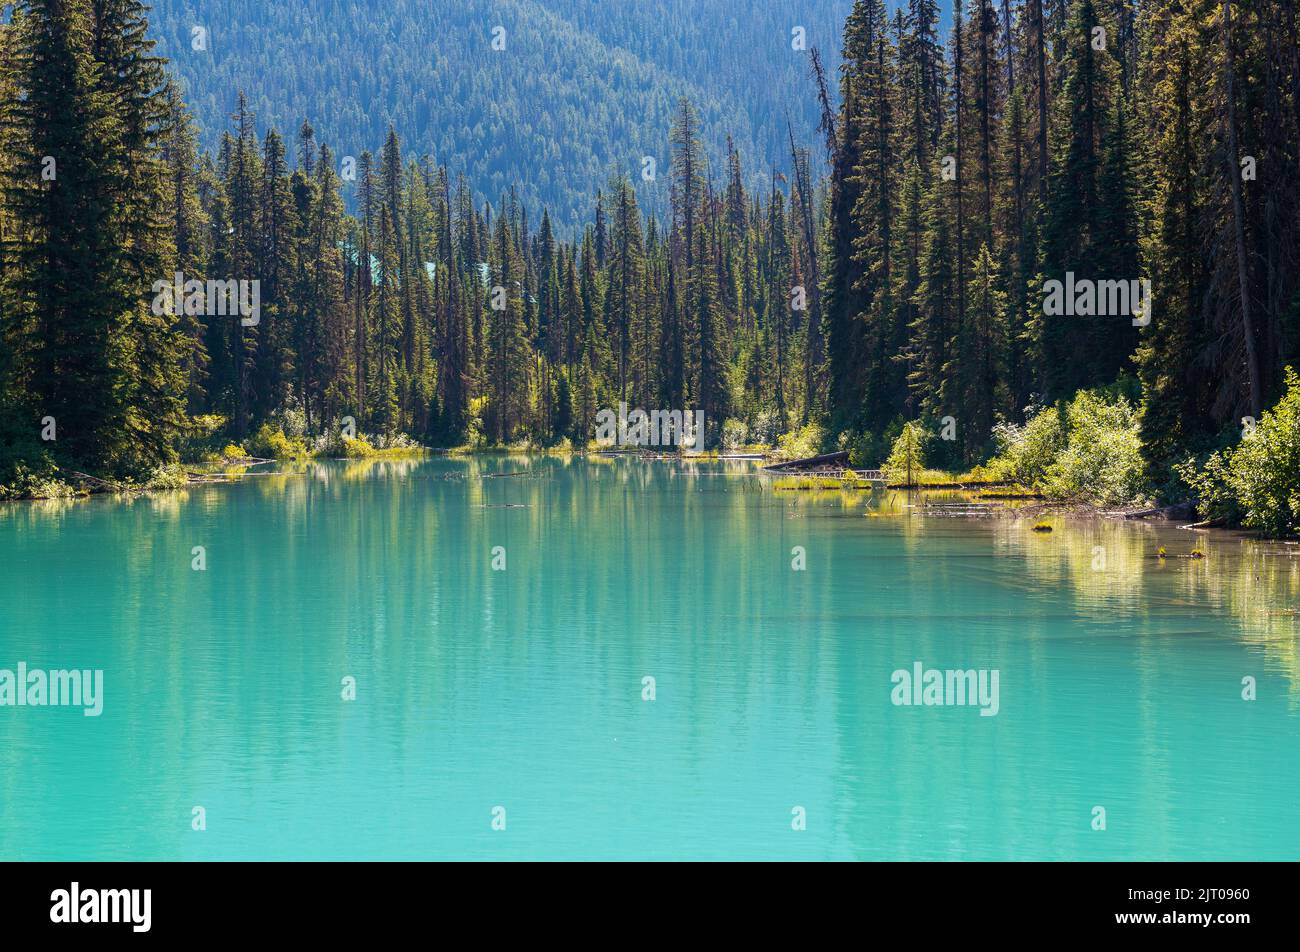 Emerald lake with turquoise waters, Yoho national park, Alberta, Canada. Stock Photo